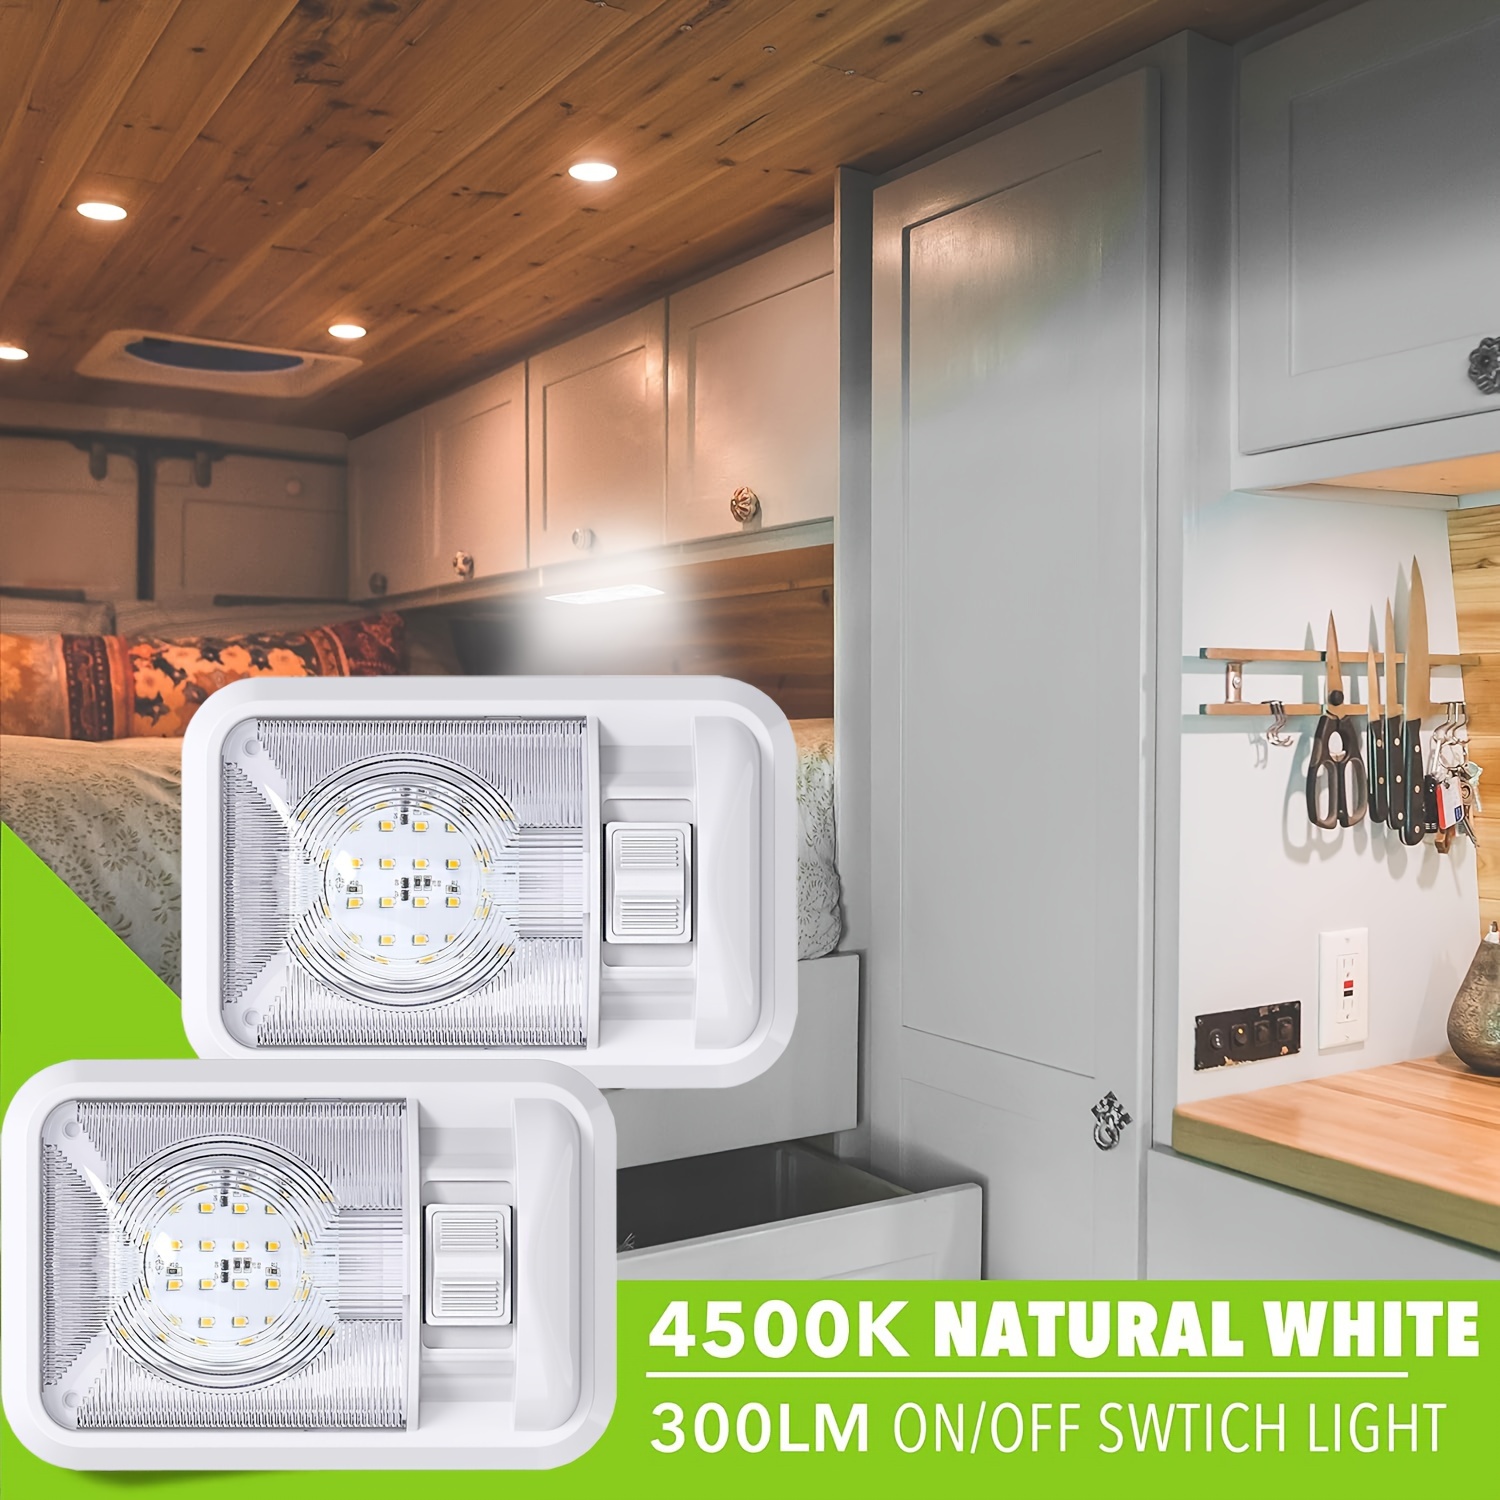 Barra de luz LED, 12 V, blanco frío, 6000 K, barra de luz LED interior con  interruptor de encendido/apagado para caravana, cámper, camioneta